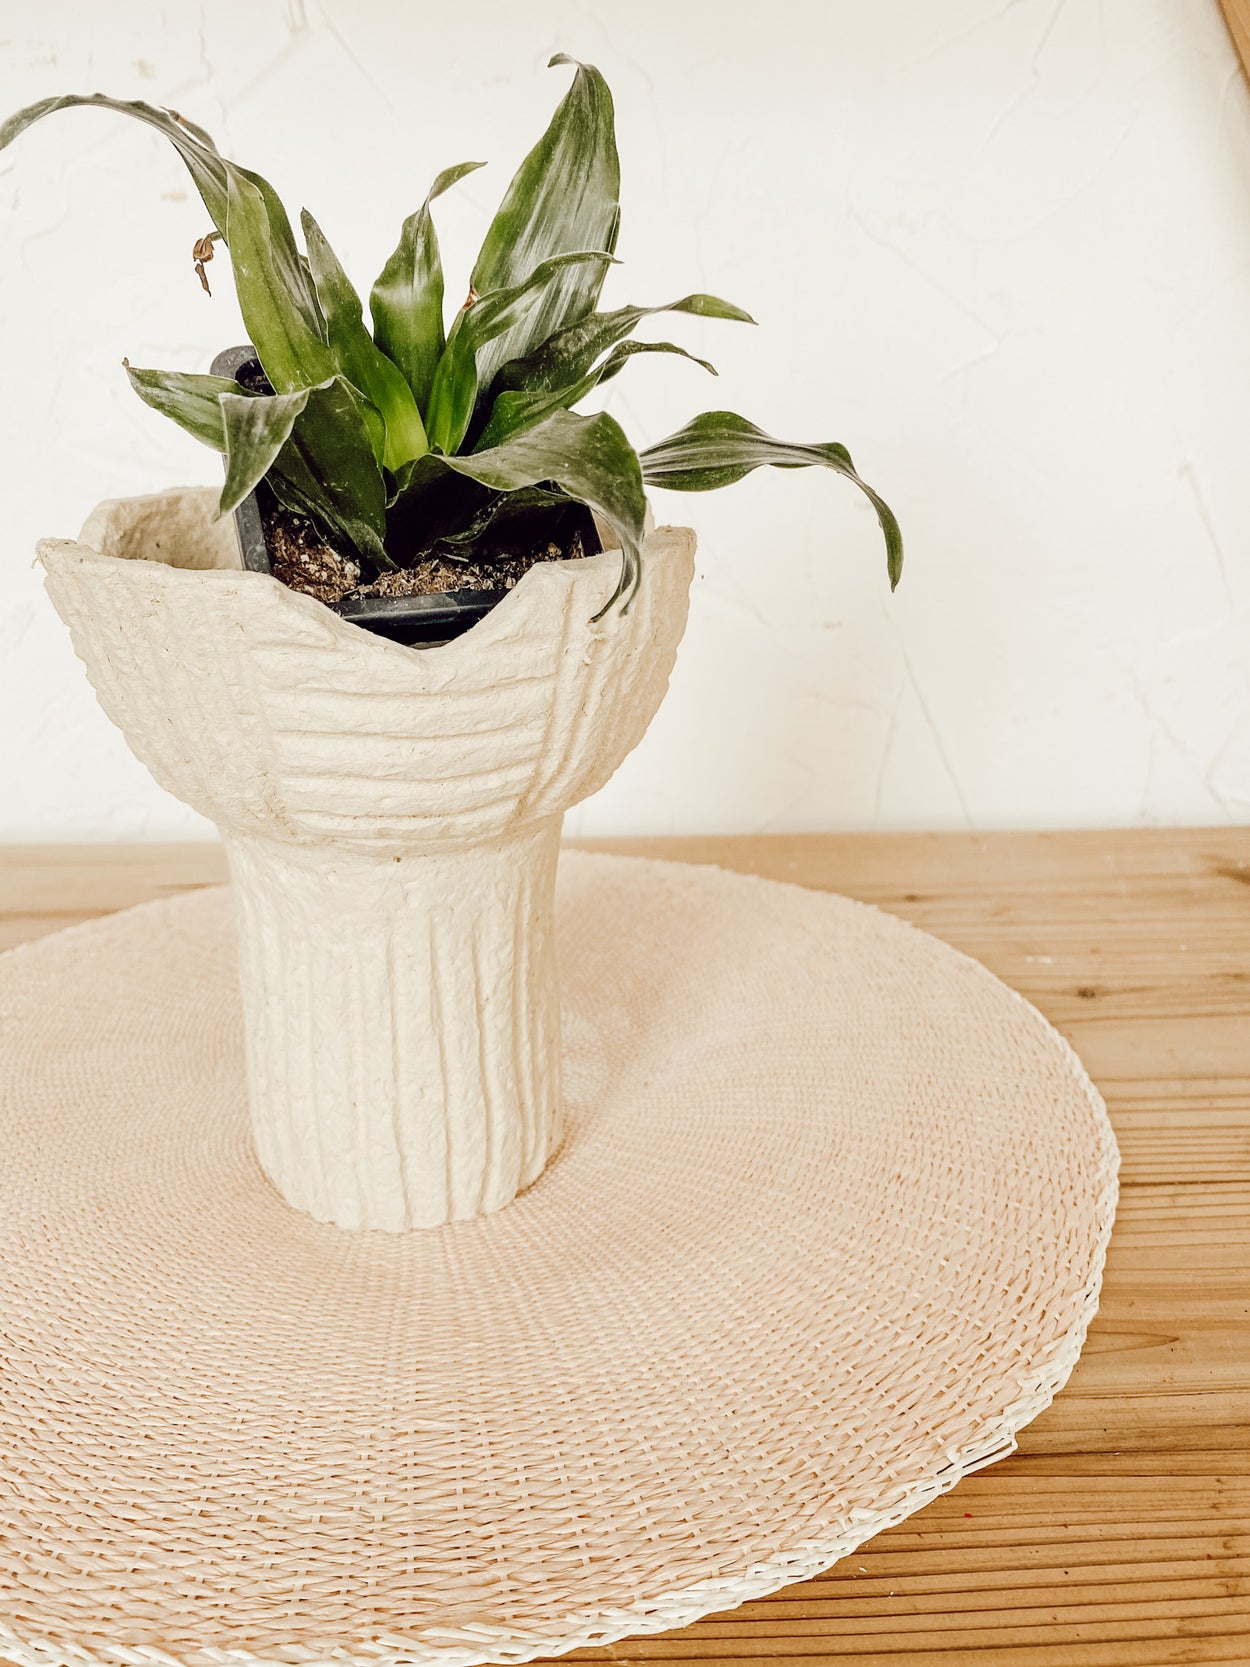 Natural Paper Mache Vase